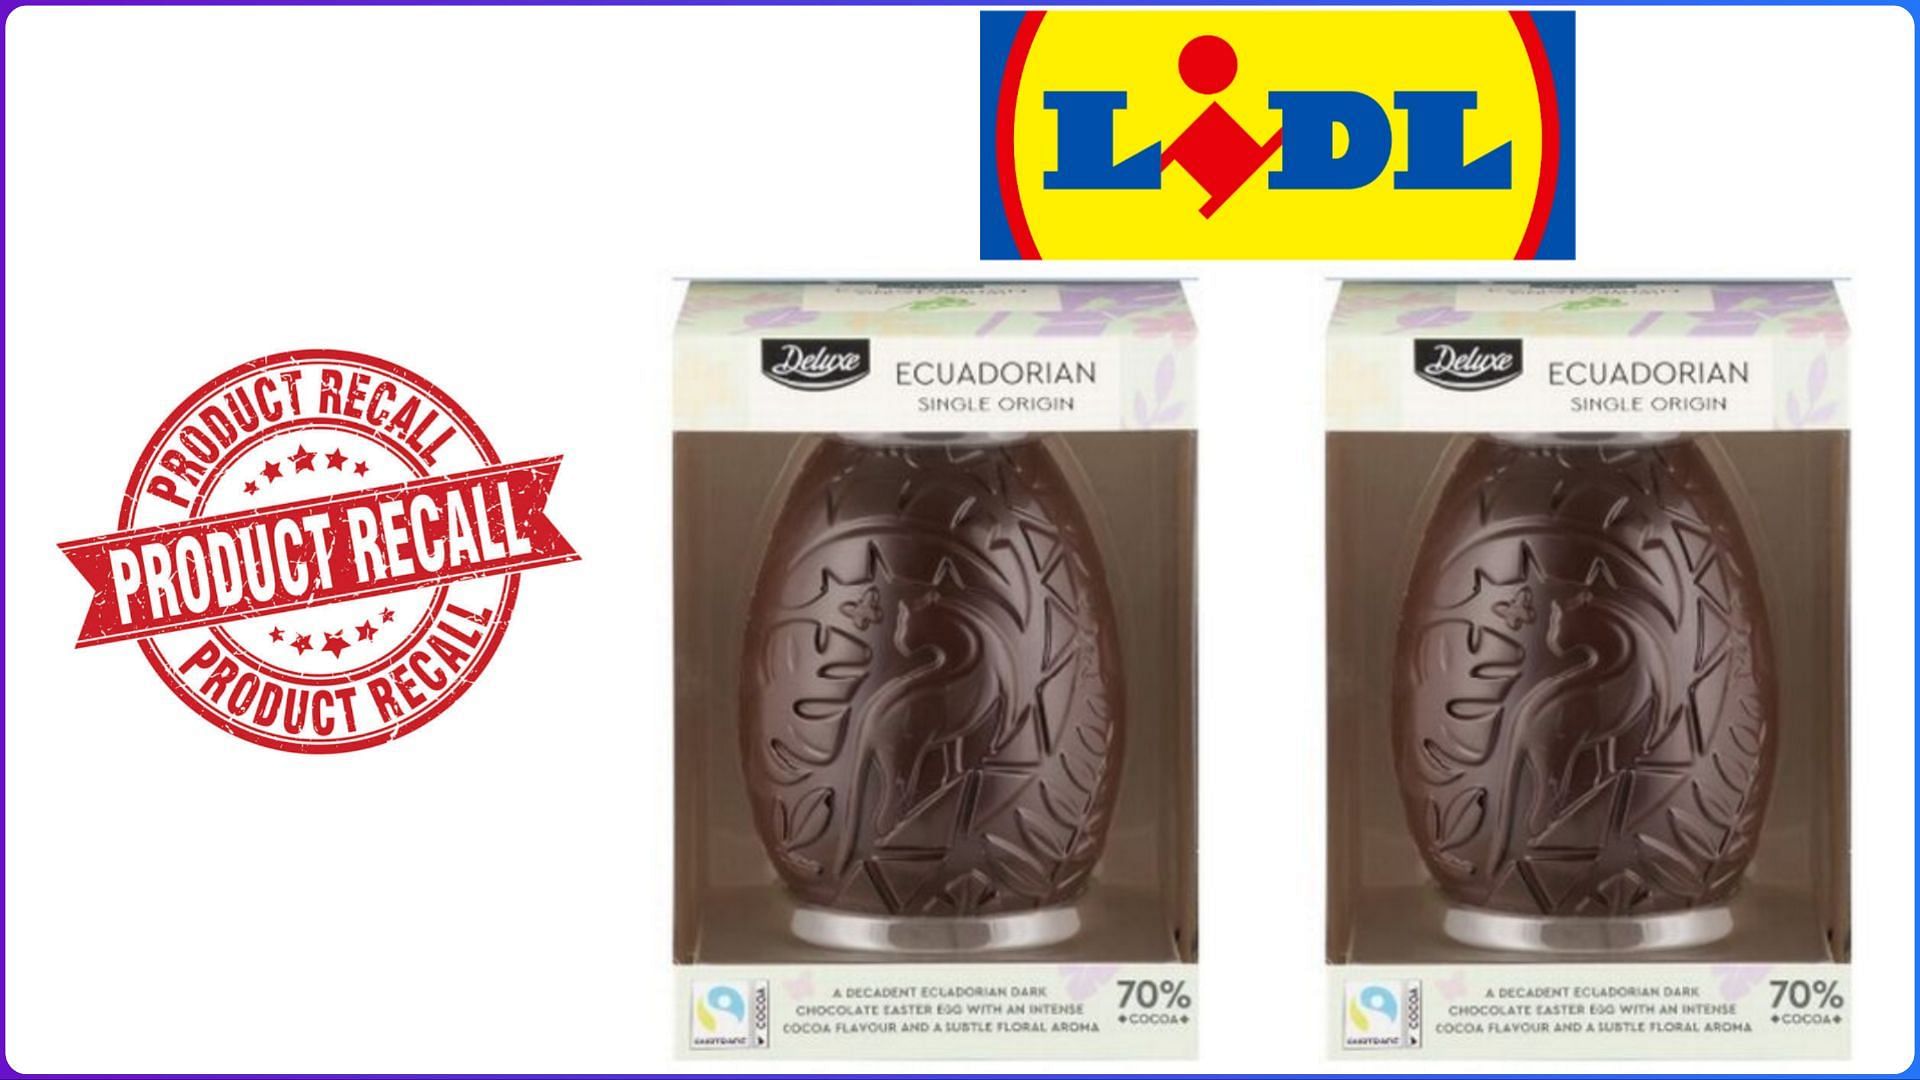 Lidl recalls Deluxe Ecuadorian Single Origin Easter Eggs over undeclared allergens concerns (Image via Lidl)